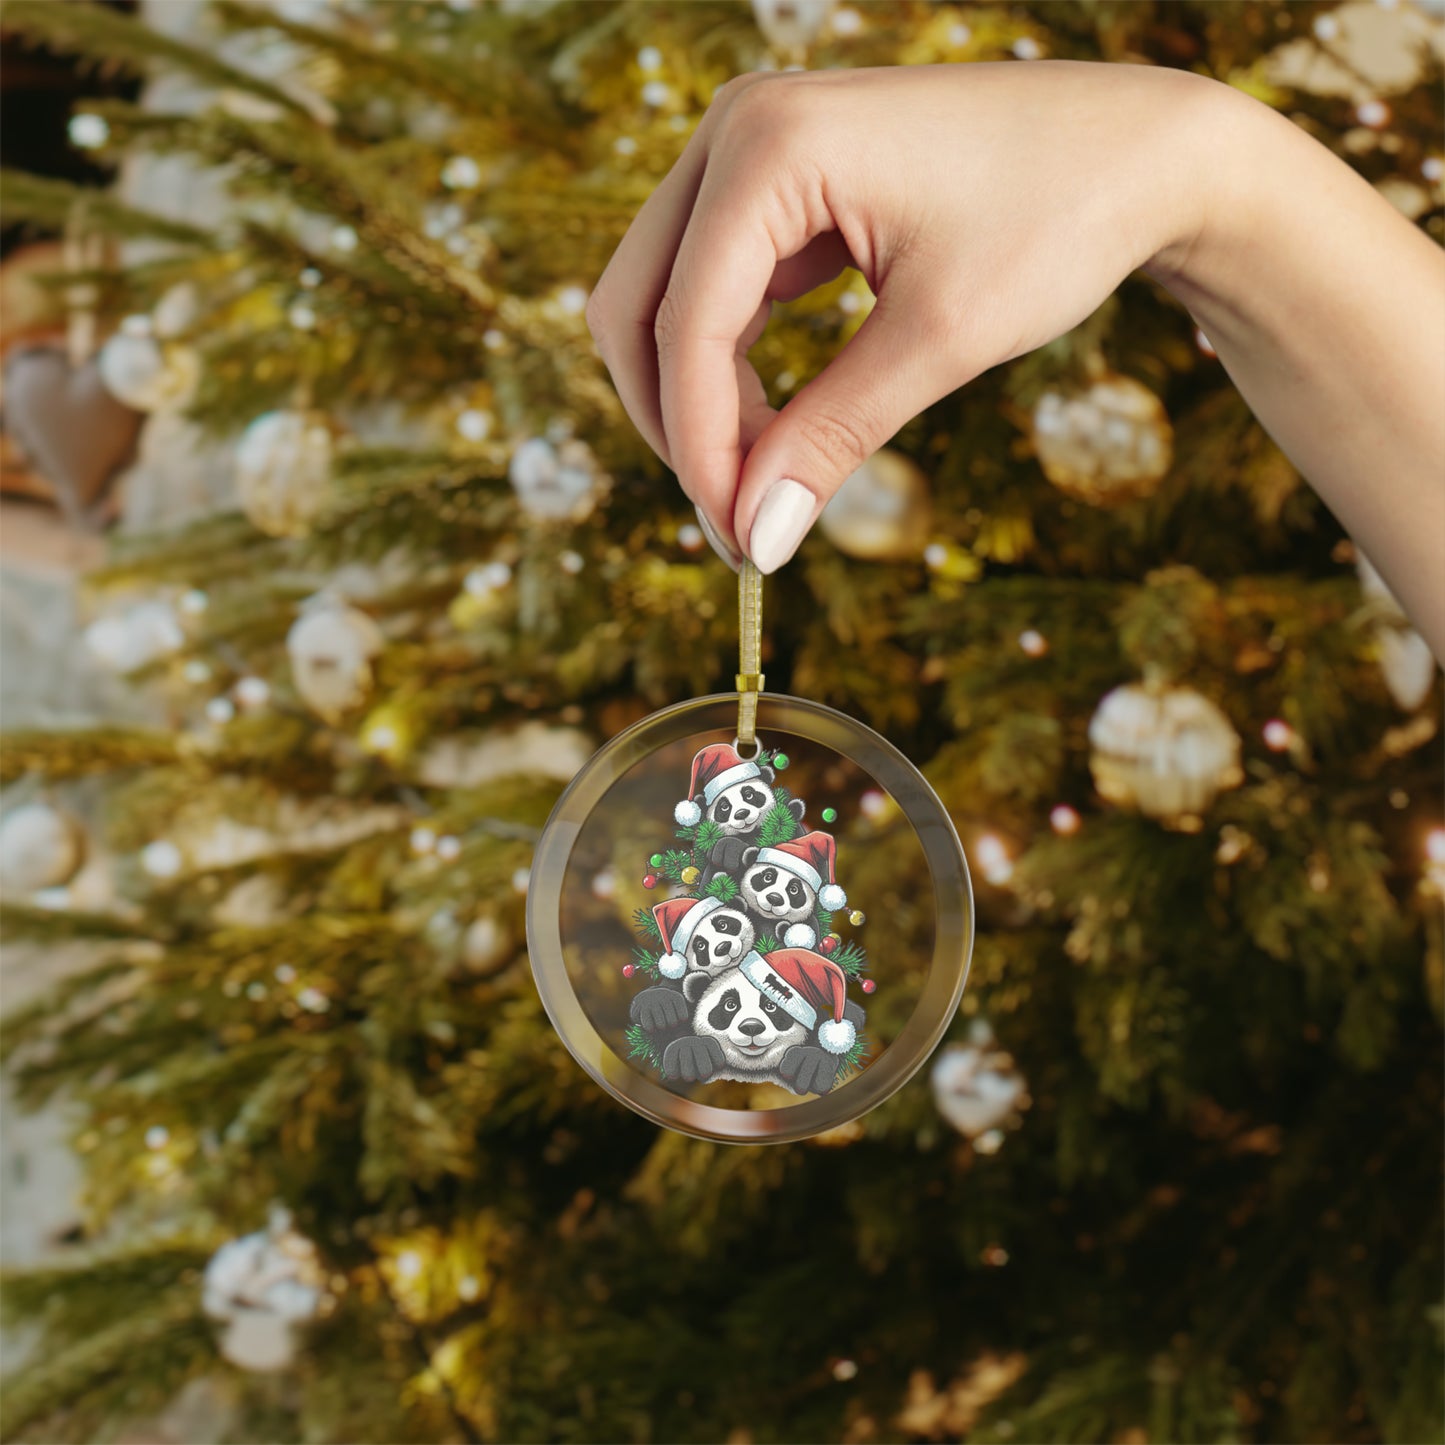 Showtie Panda Christmas Glass Ornaments